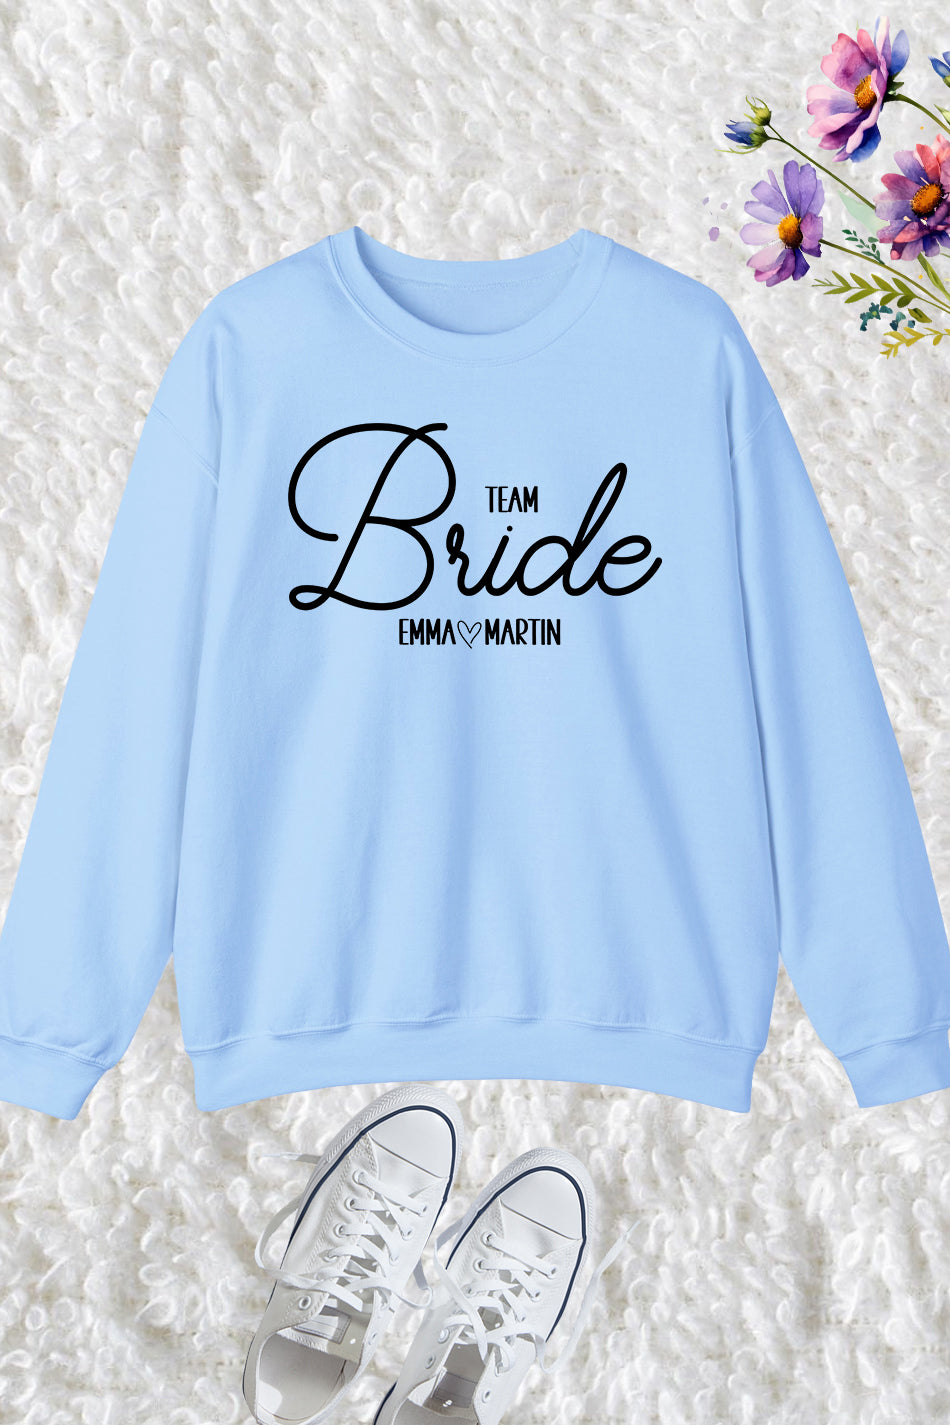 Bride and team bride Custom Sweatshirts